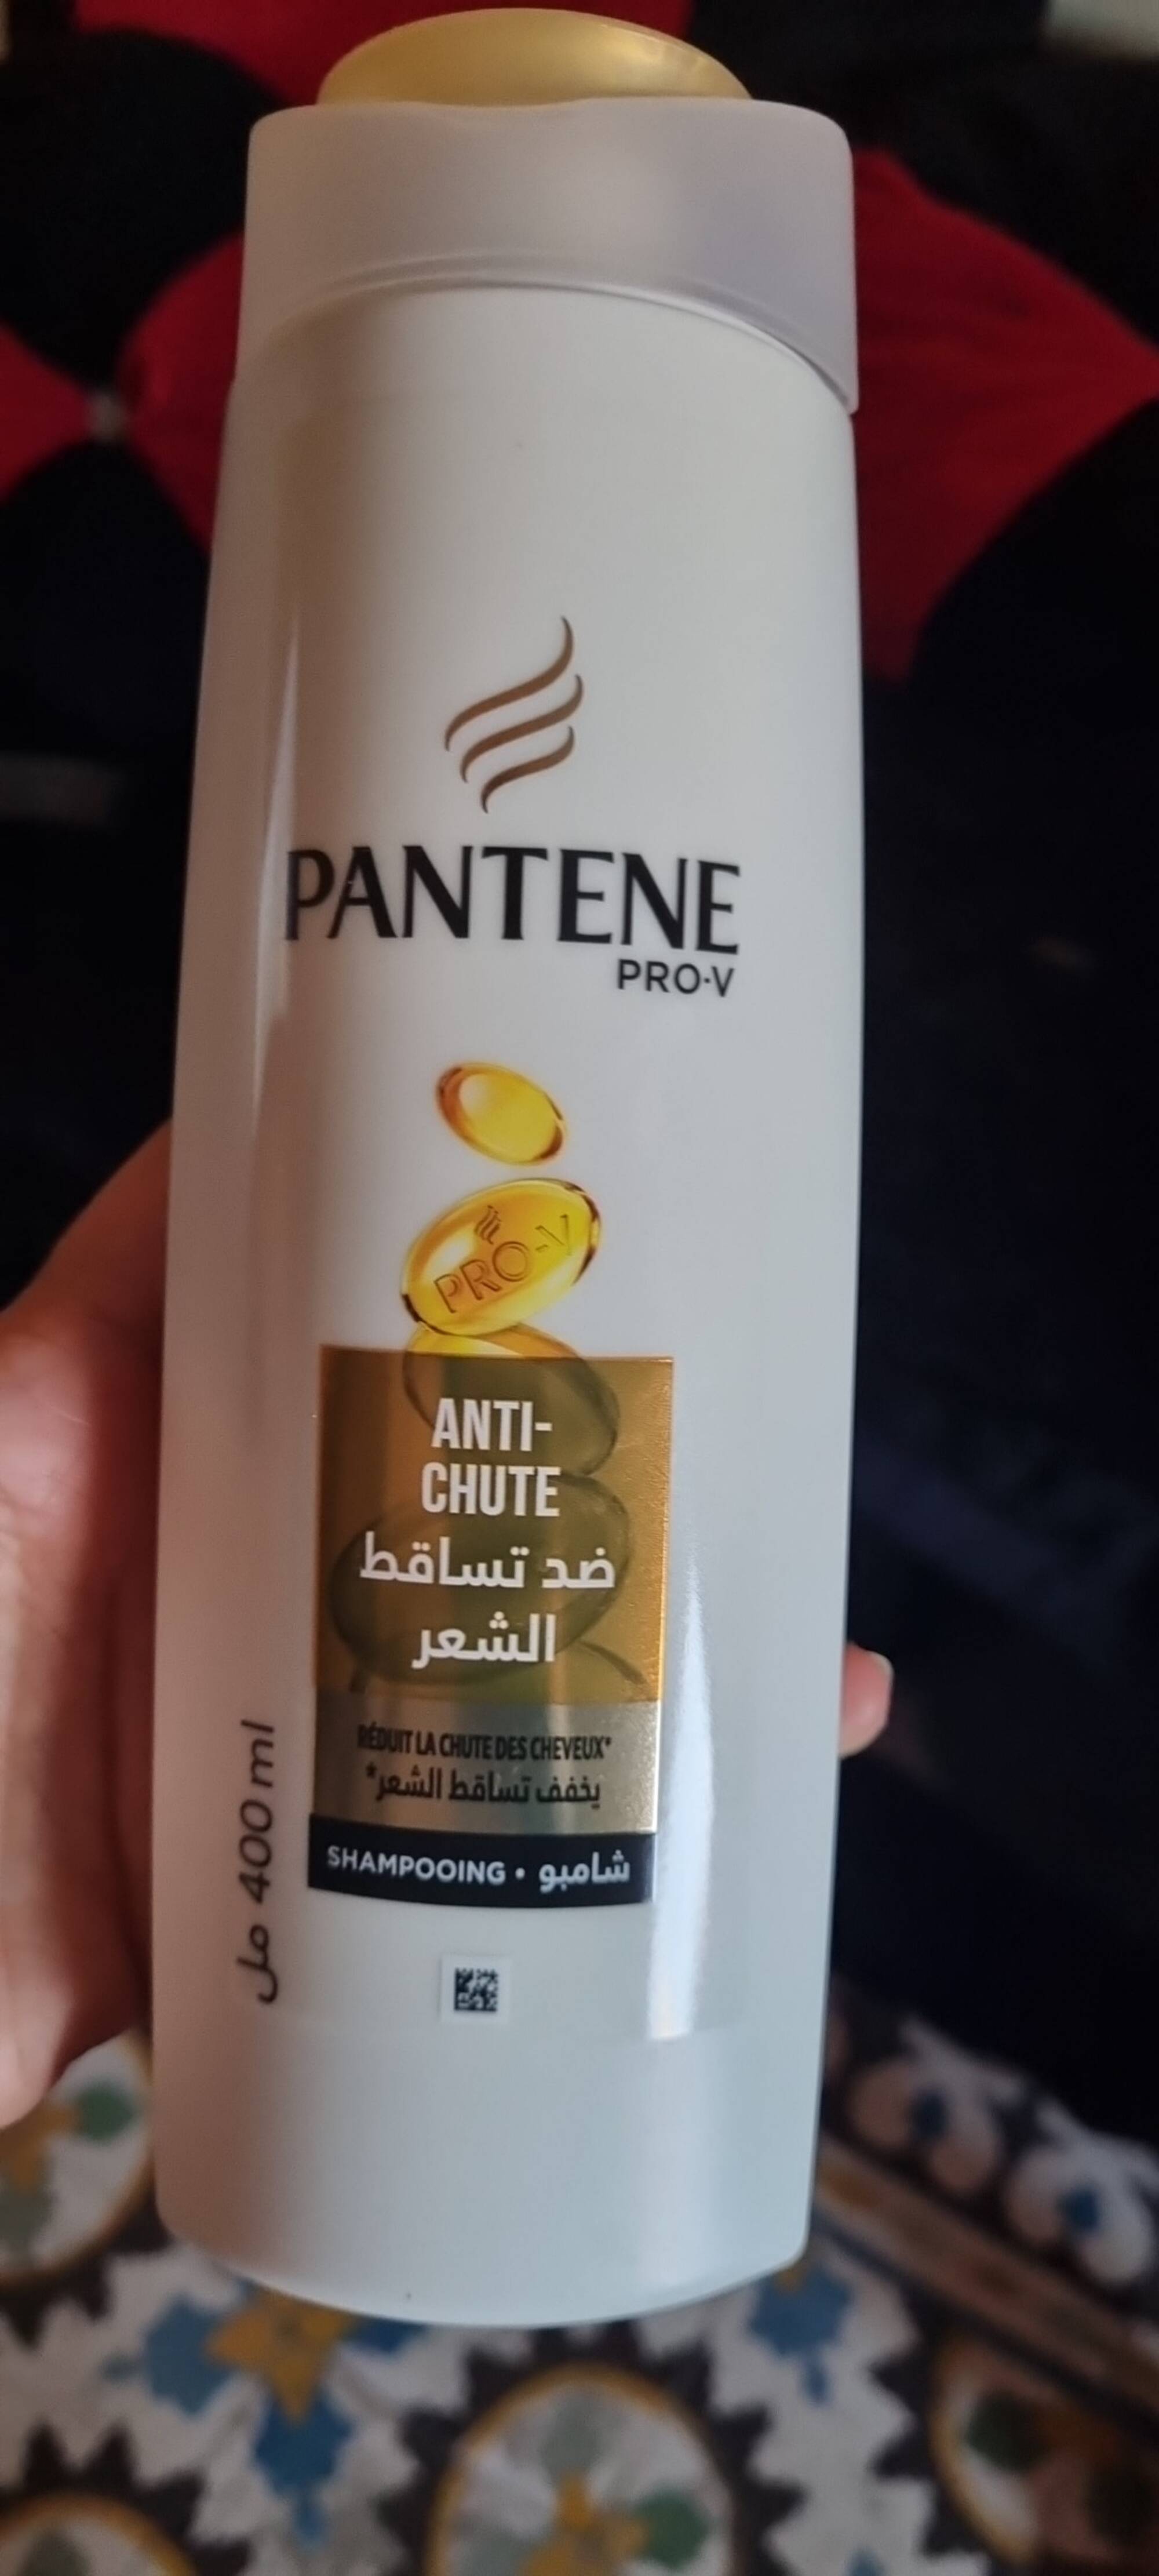 PANTENE PRO-V - Anti-chue - Shampooing